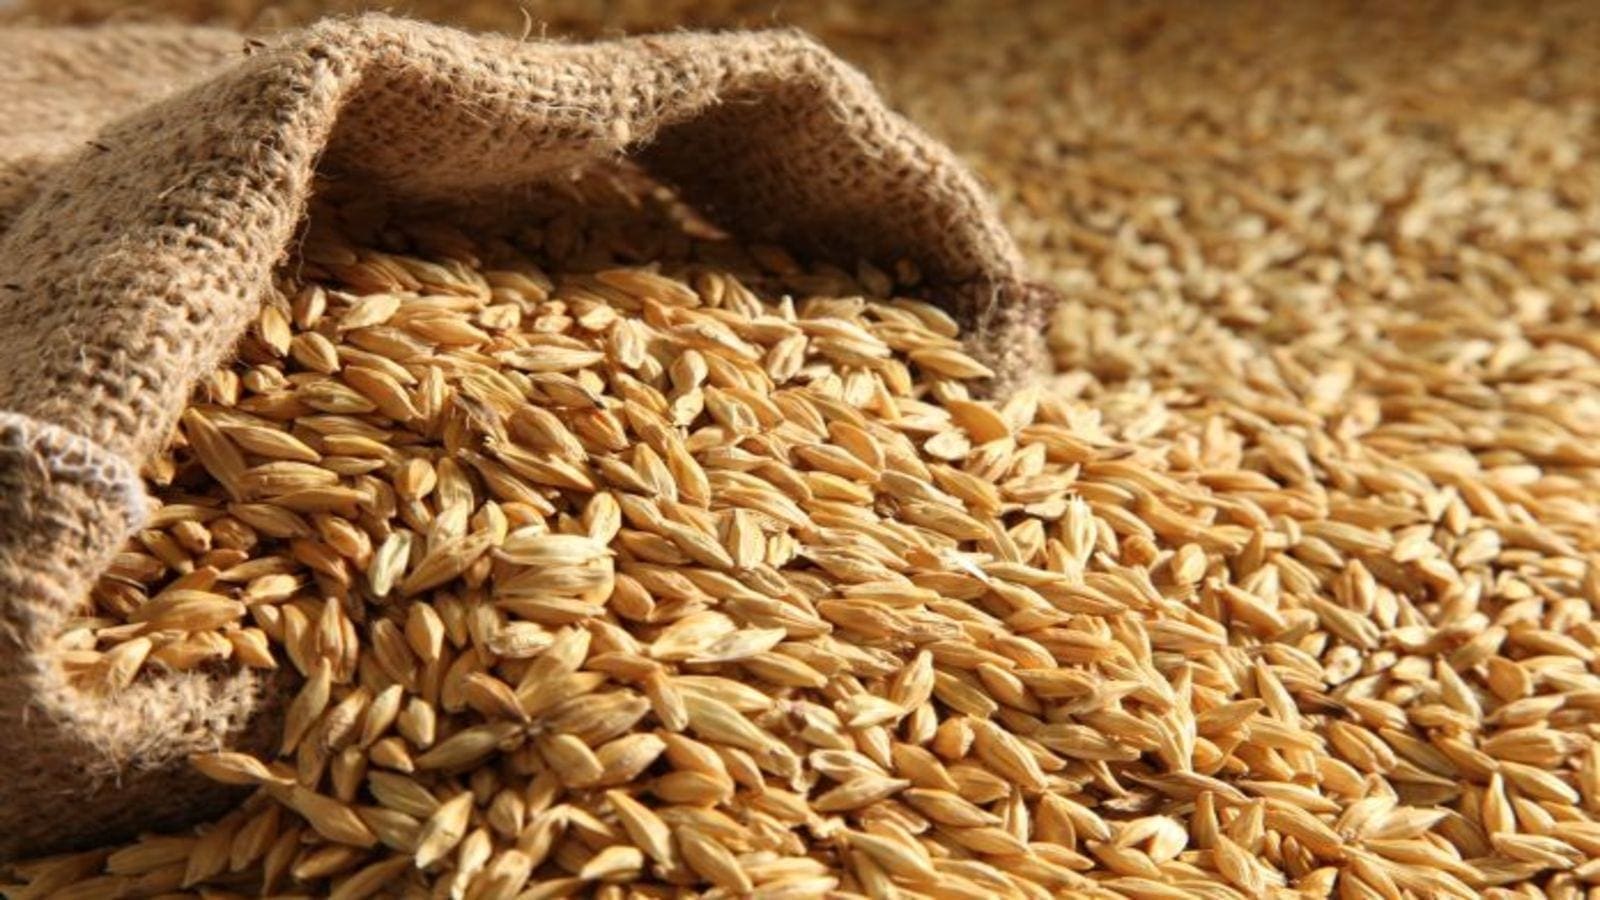 Saudi Arabia privatizes barley imports and distribution  business